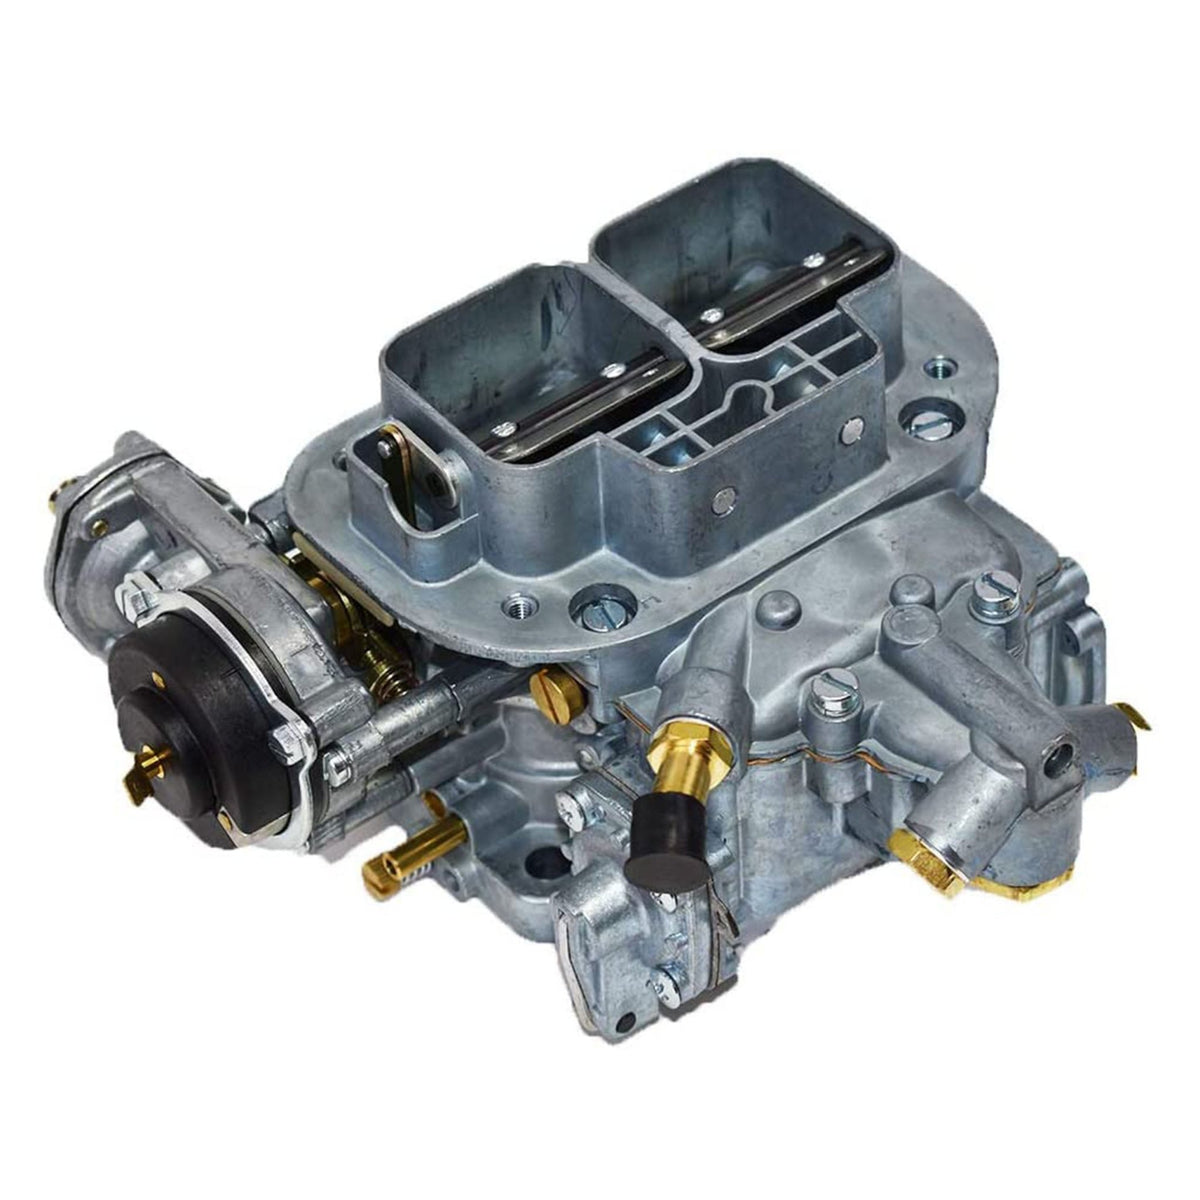 Kit Carburateur Weber 32/36 DFEV, Performance VW